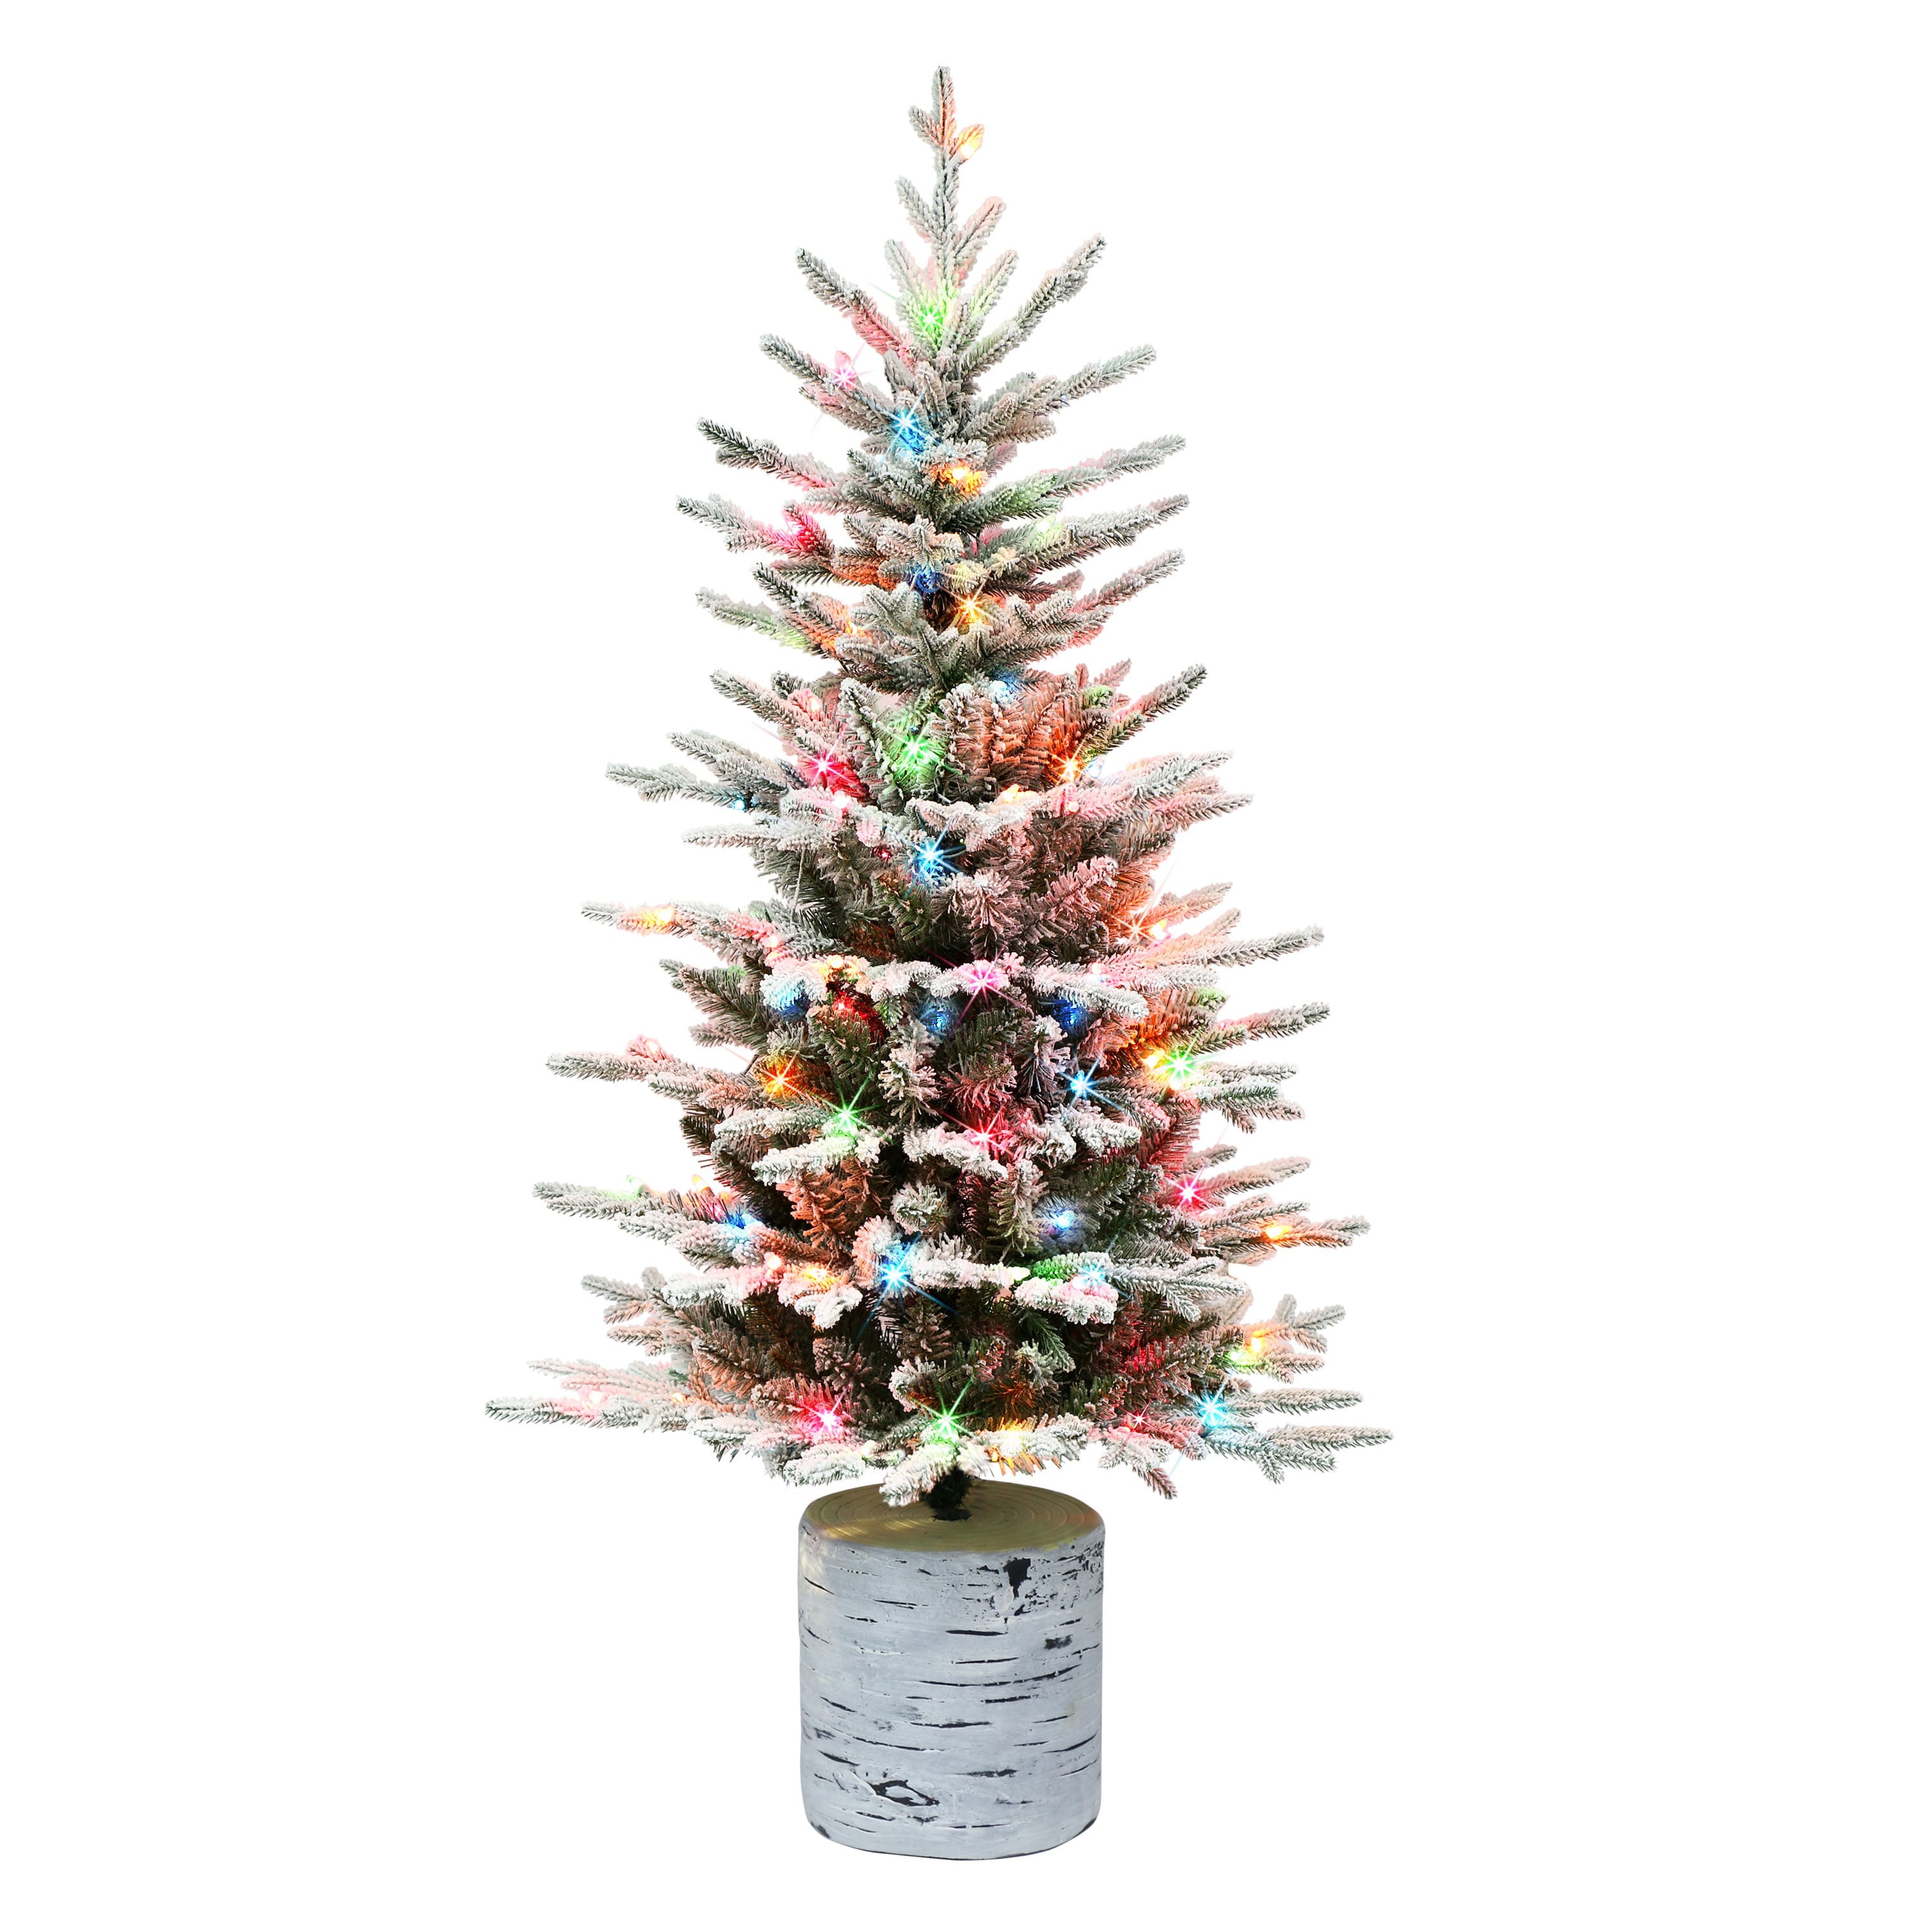 6 Pack: 4.5ft. Pre-Lit Flocked Arctic Fir Artificial Christmas Tree, Multicolor Lights